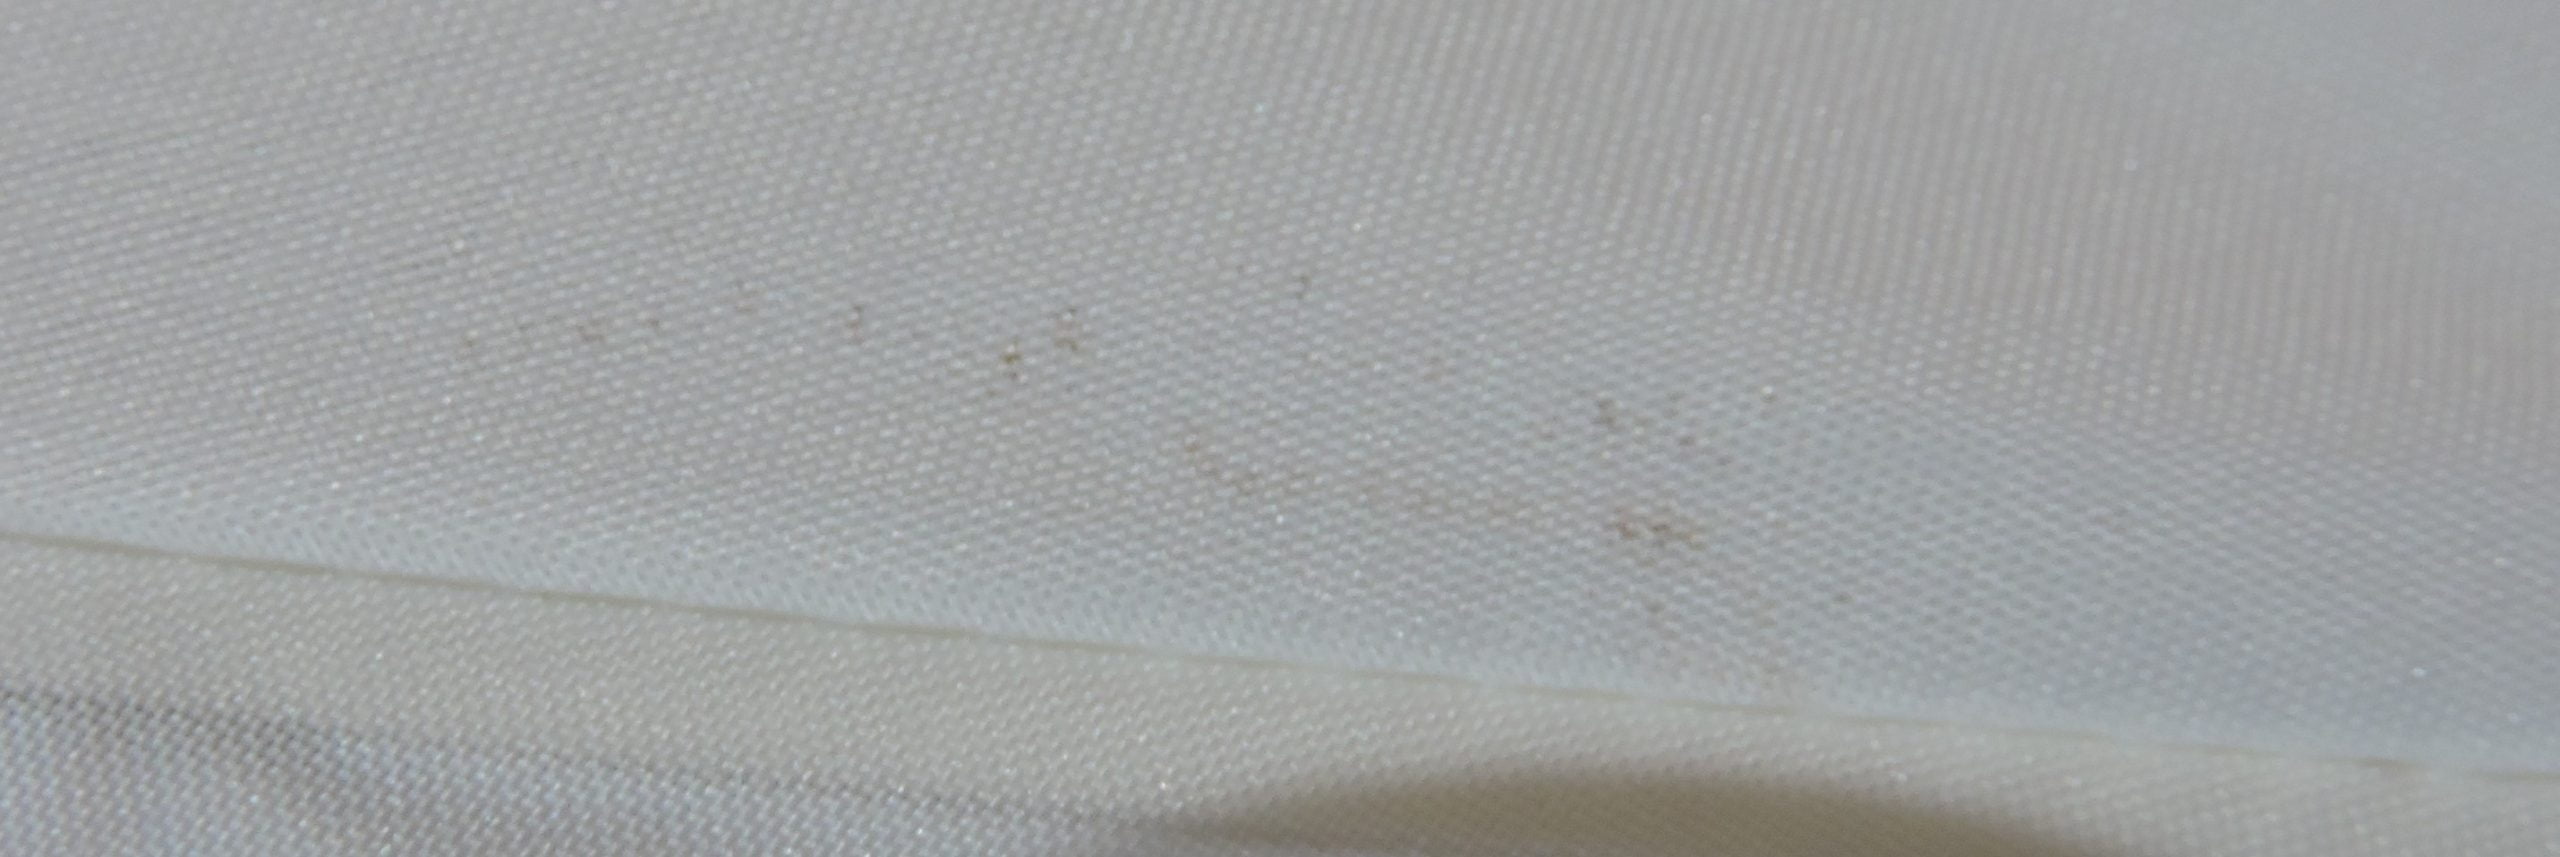 Ivory compact umbrella fabric close-up